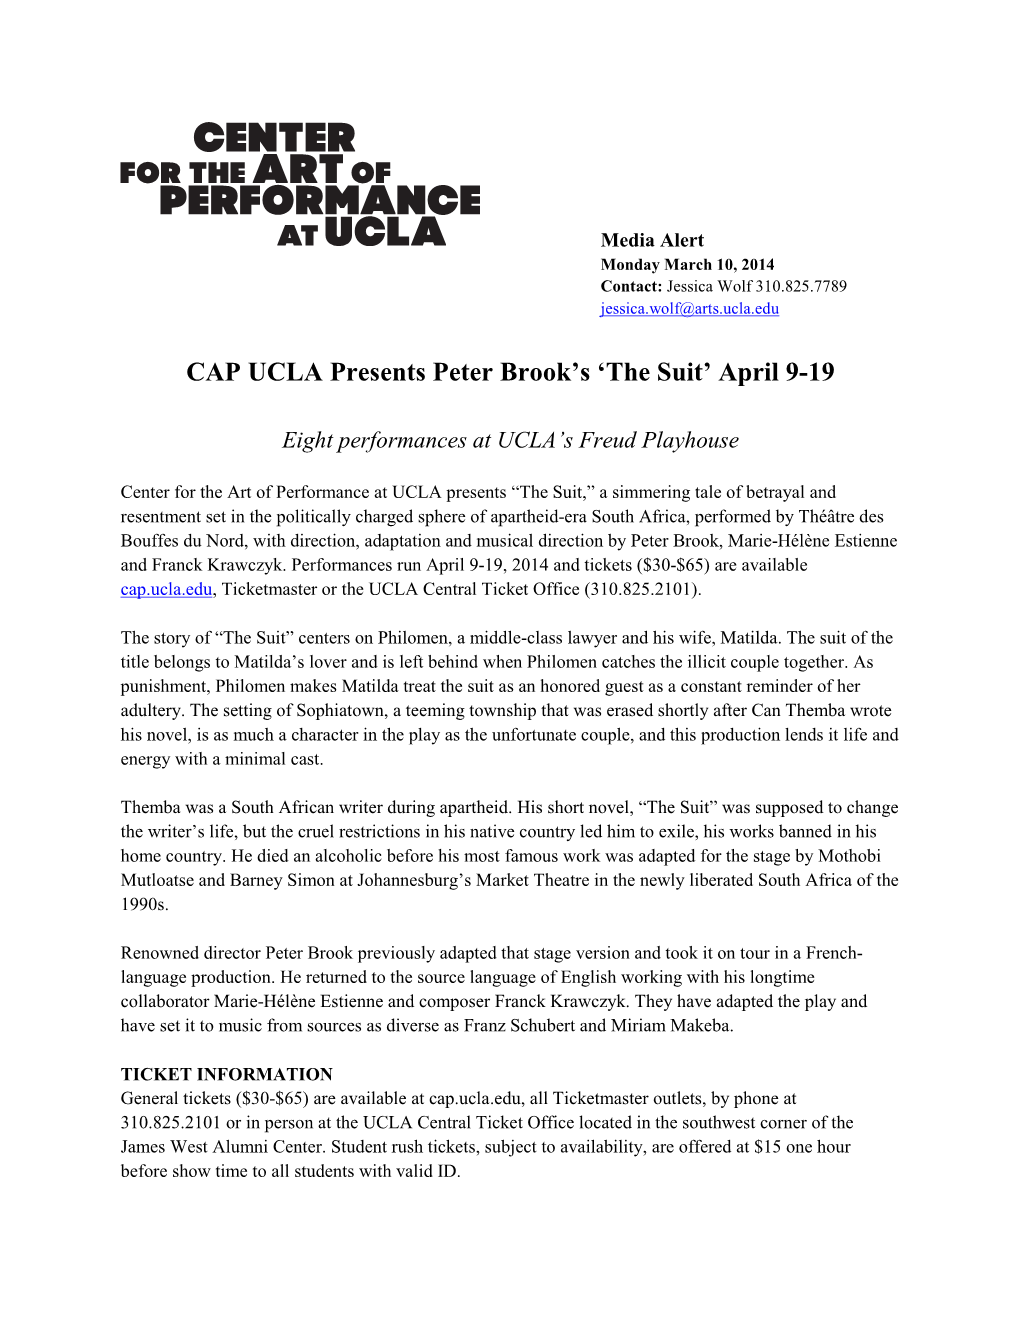 CAP UCLA Presents Peter Brook's 'The Suit'